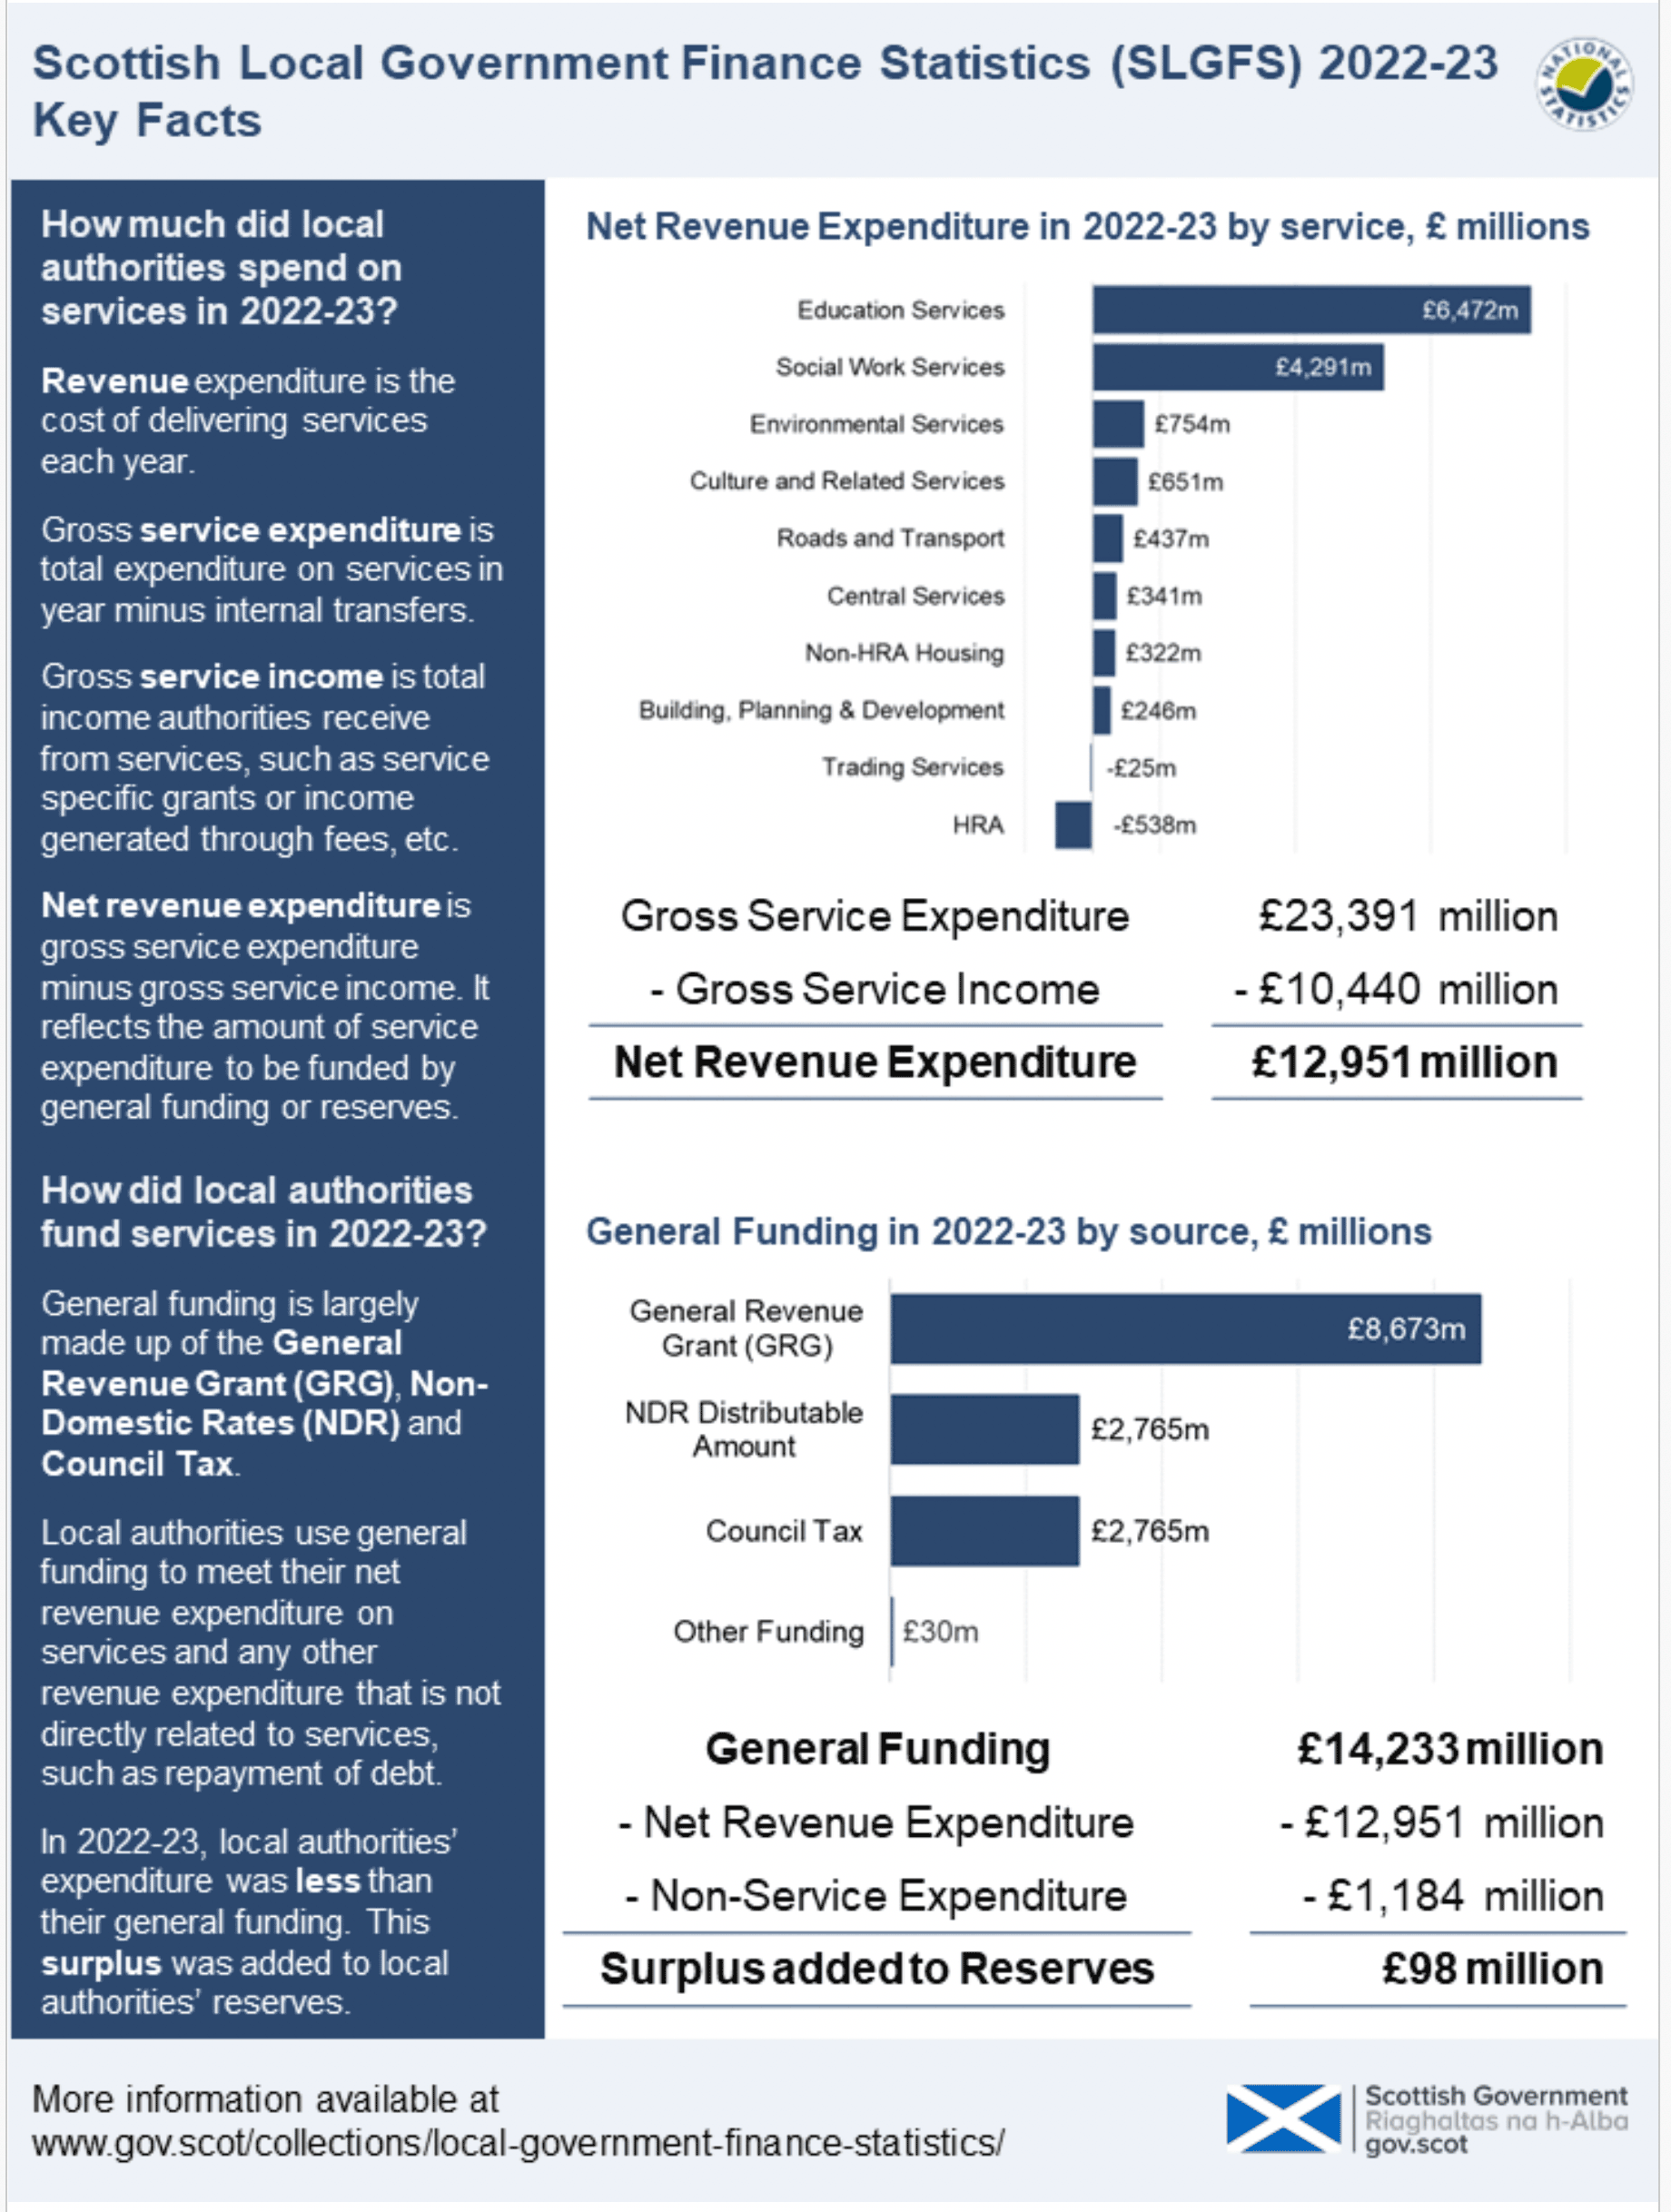 Scottish Local Government Finance Statistics (SLGFS) 2022-23 Key Facts - Infographic 1